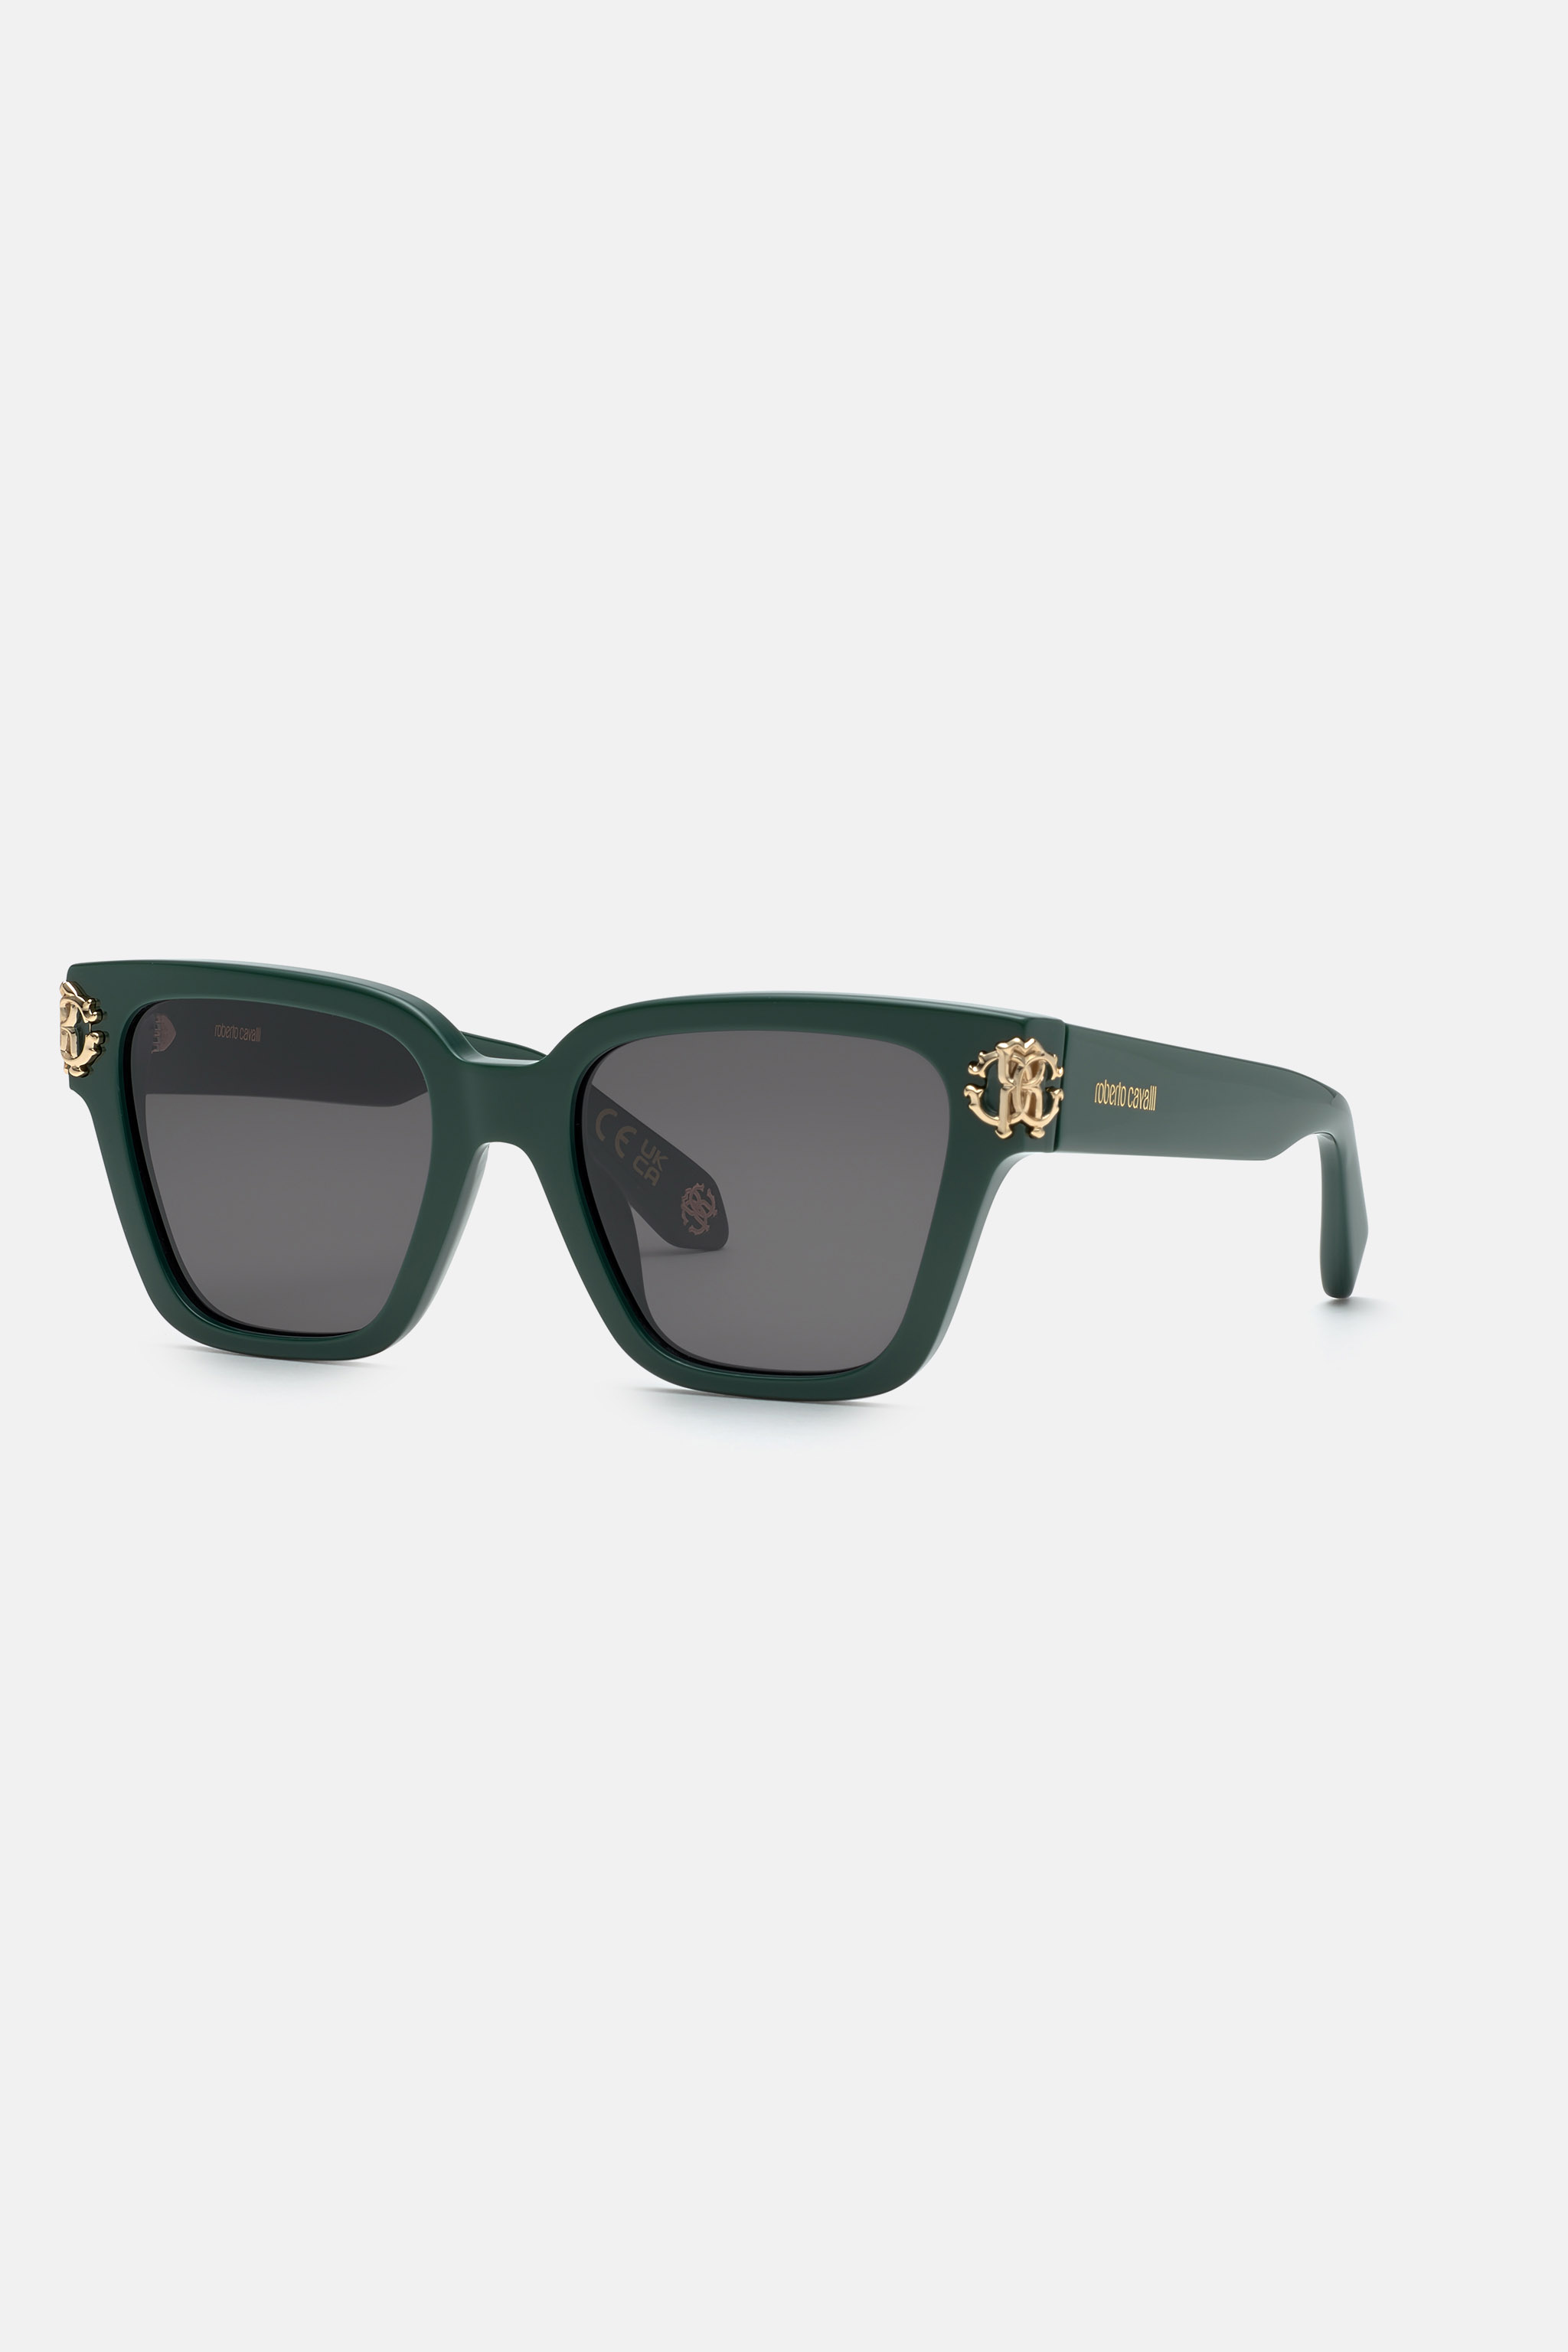 Sunglasses Roberto Cavalli - Monogram Collection | SHINY FULL GREEN ...